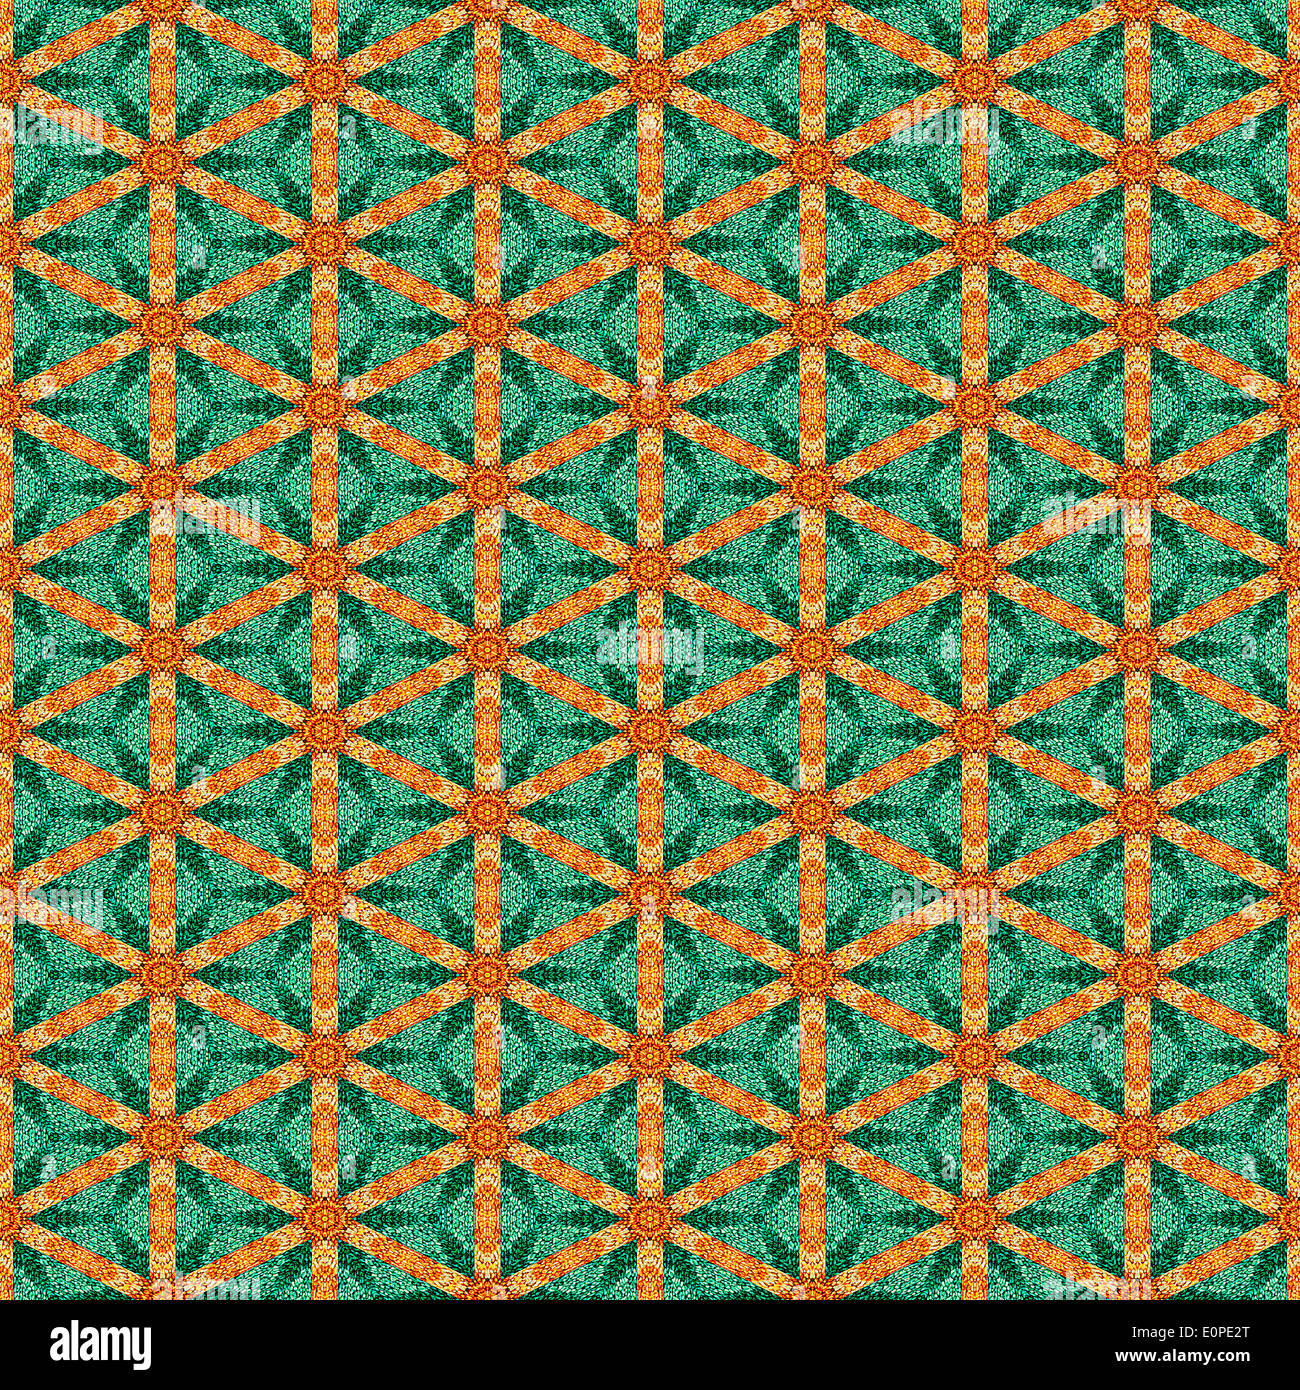 Seamless repetitive carpet pattern Stock Photo